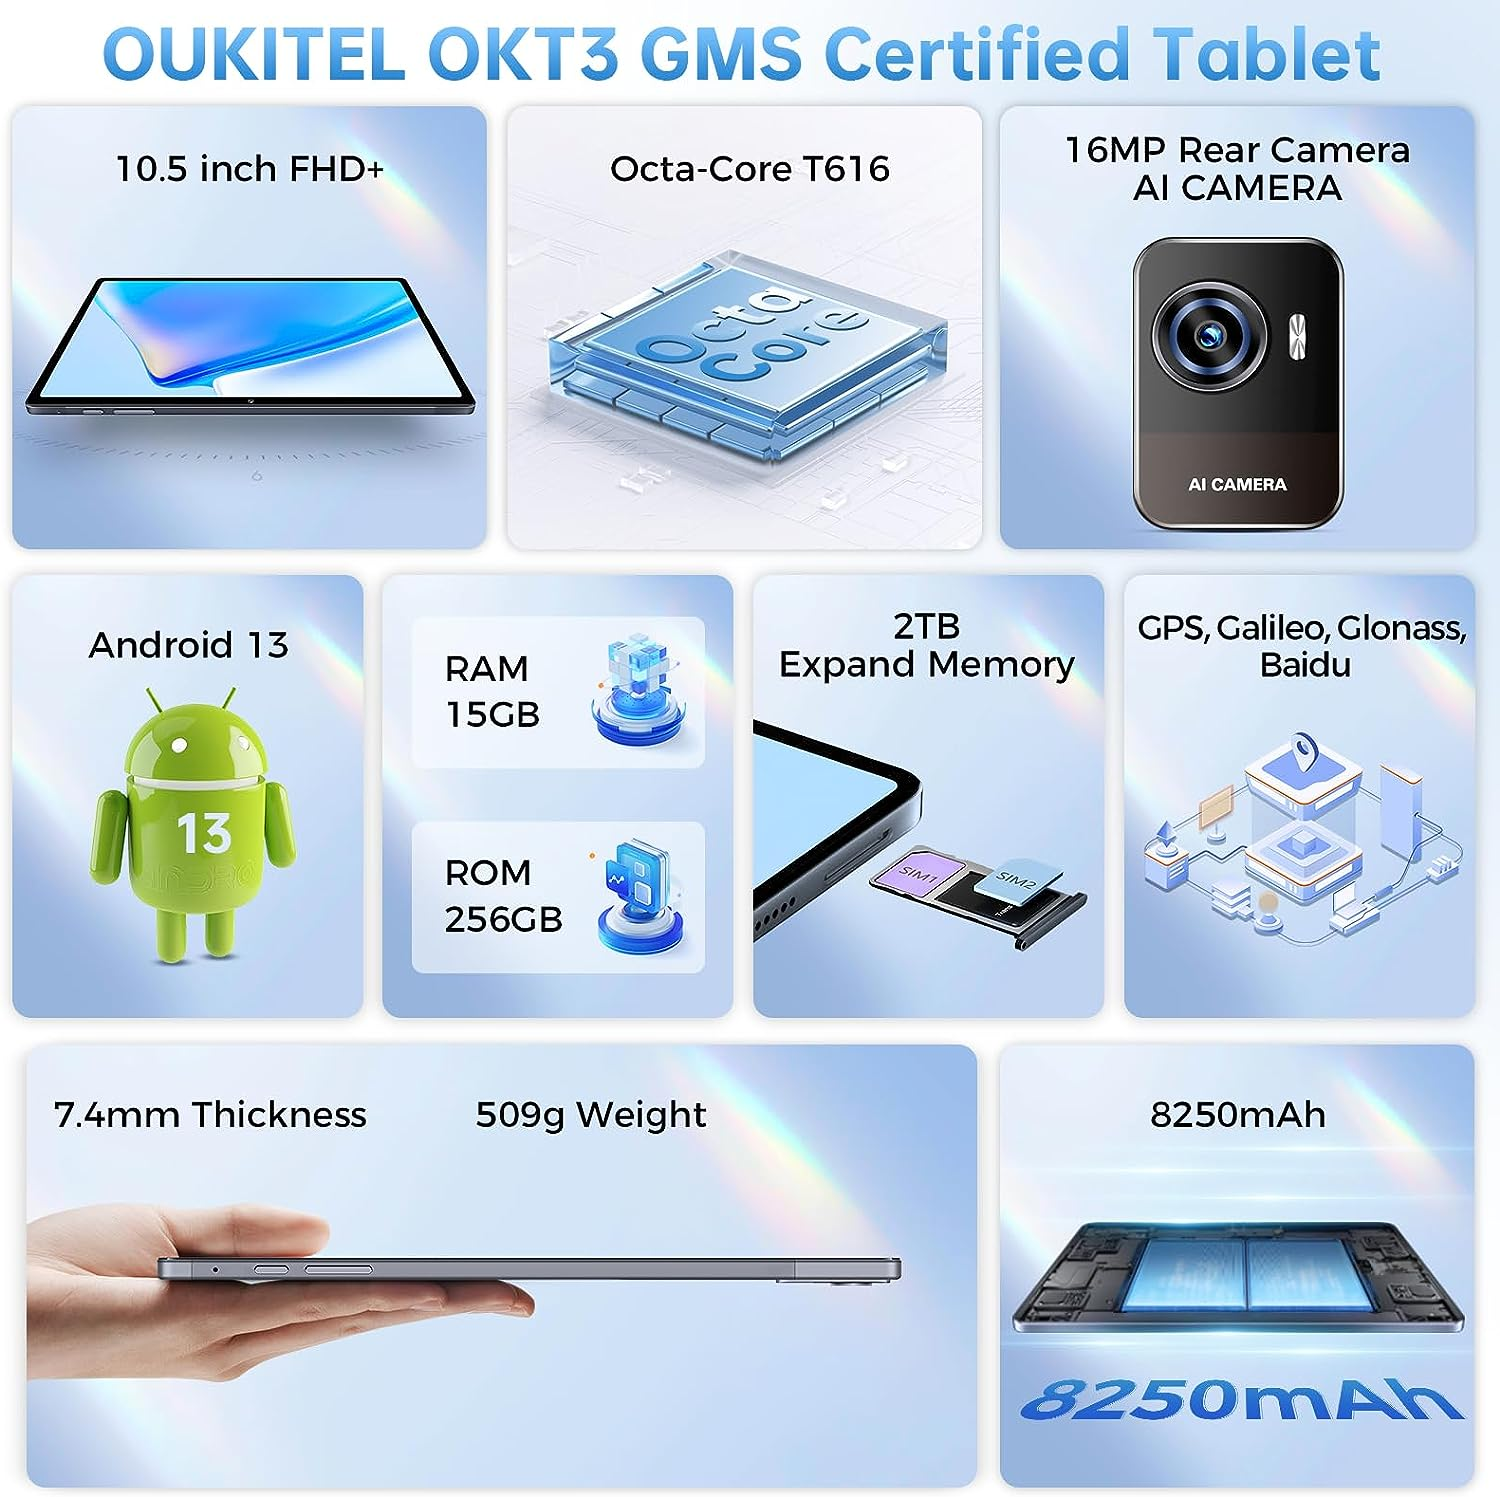 8250mAh Zoll, TF Blau GB, Android 4G, 15GB+256GB/2TB 256 OKT3 13 Tablet, 10,5 OUKITEL